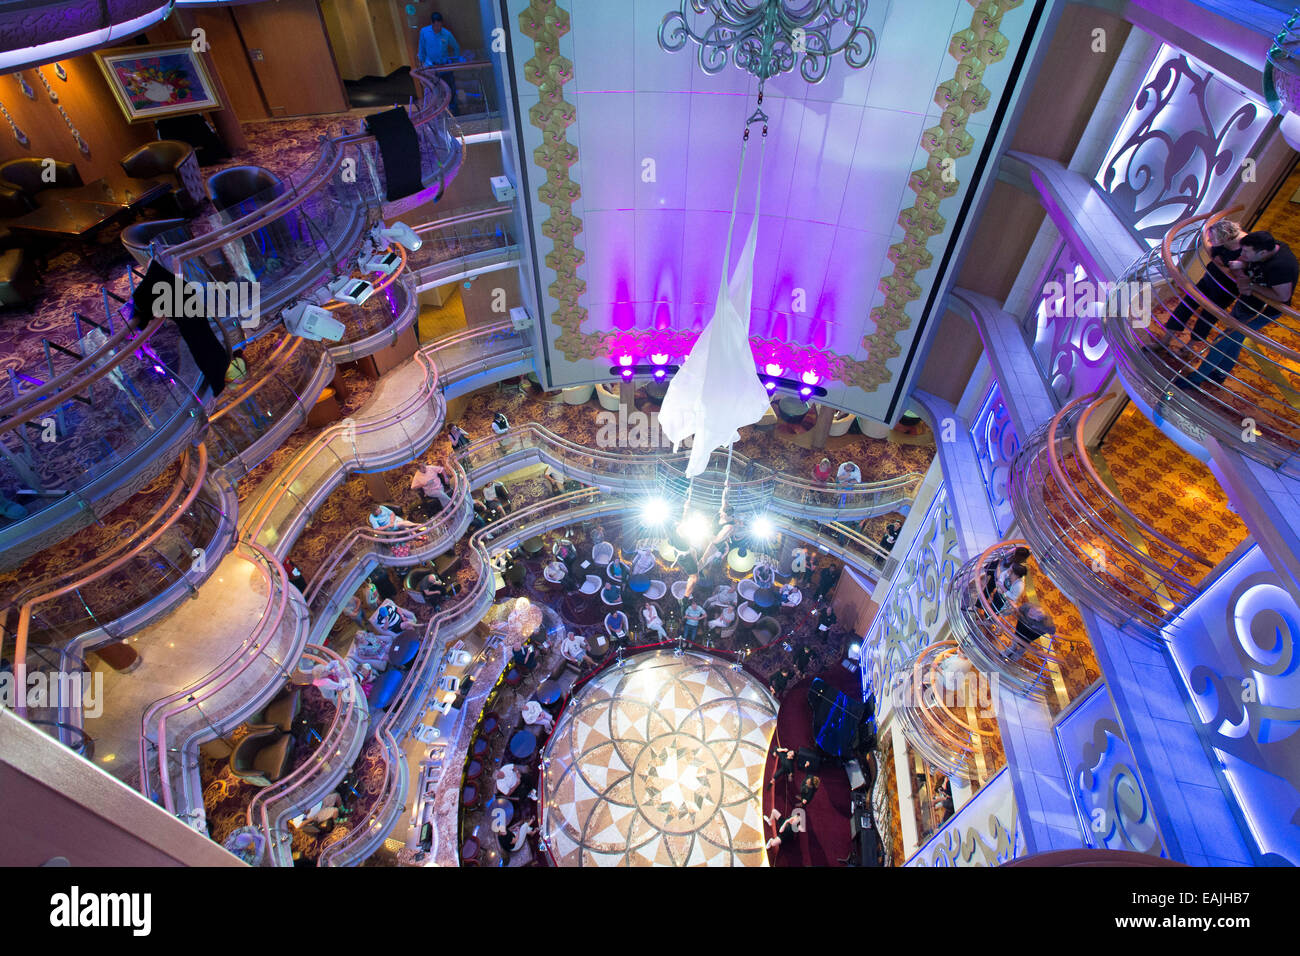 Inside Royal Caribbean's Brilliance of the Seas cruise ship. Stock Photo